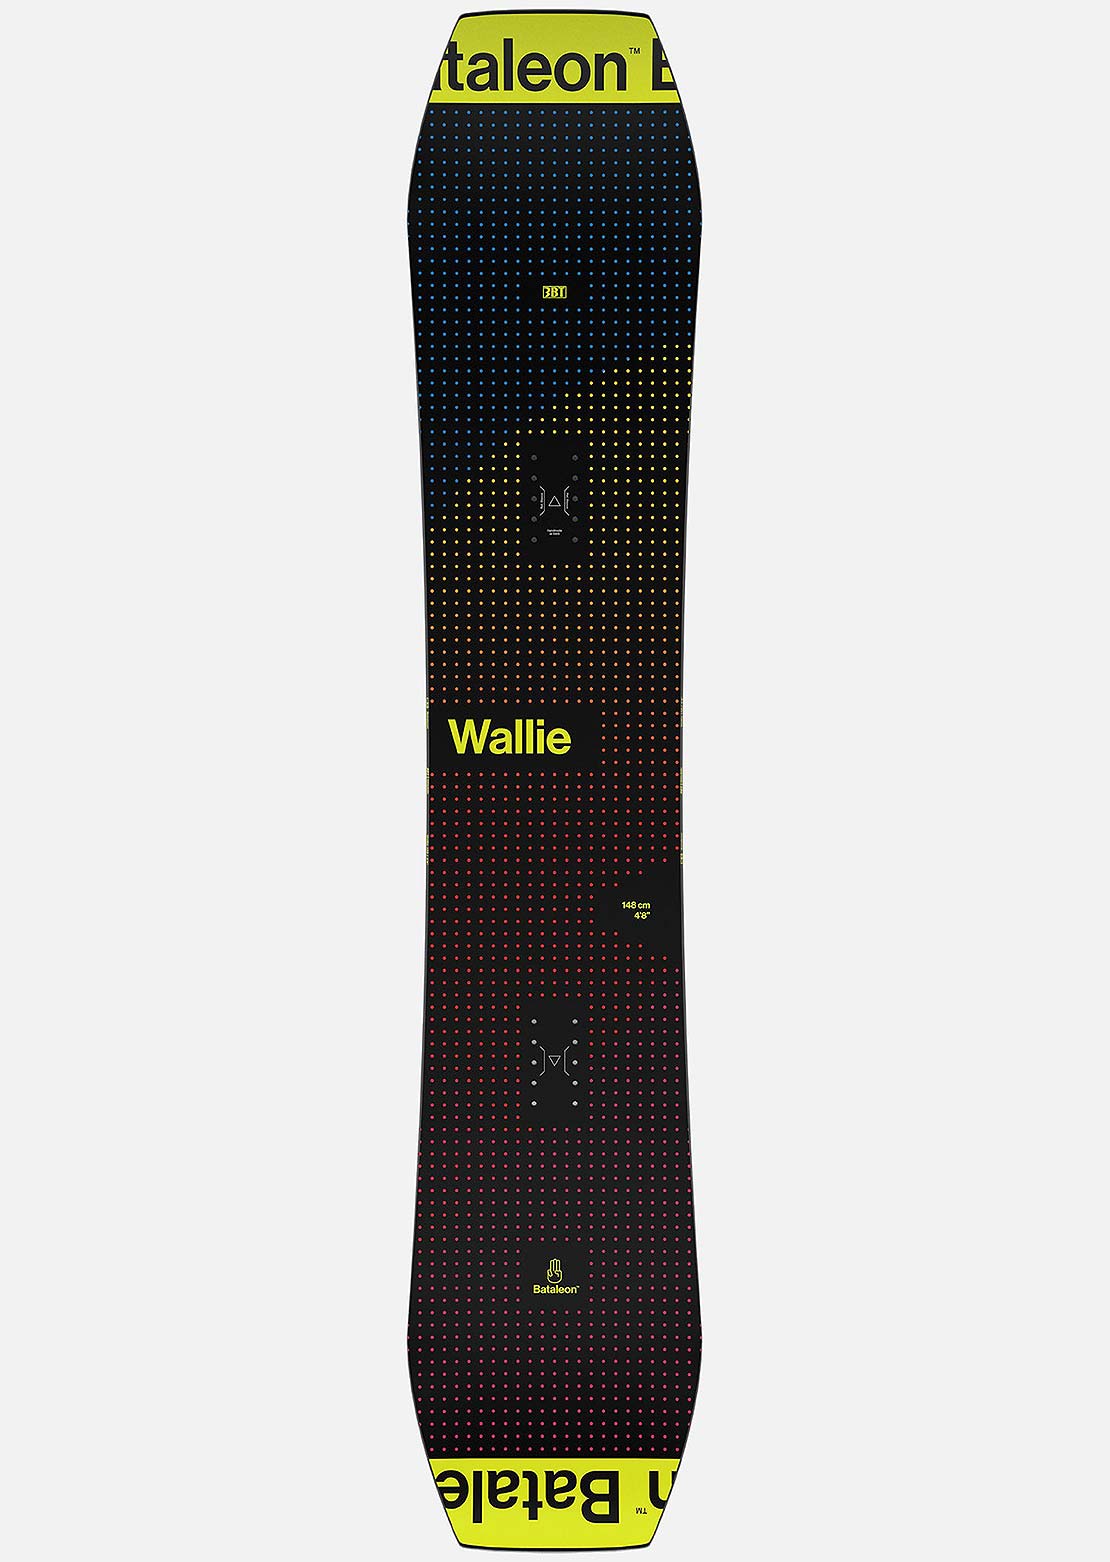 Bataleon Wallie Snowboard